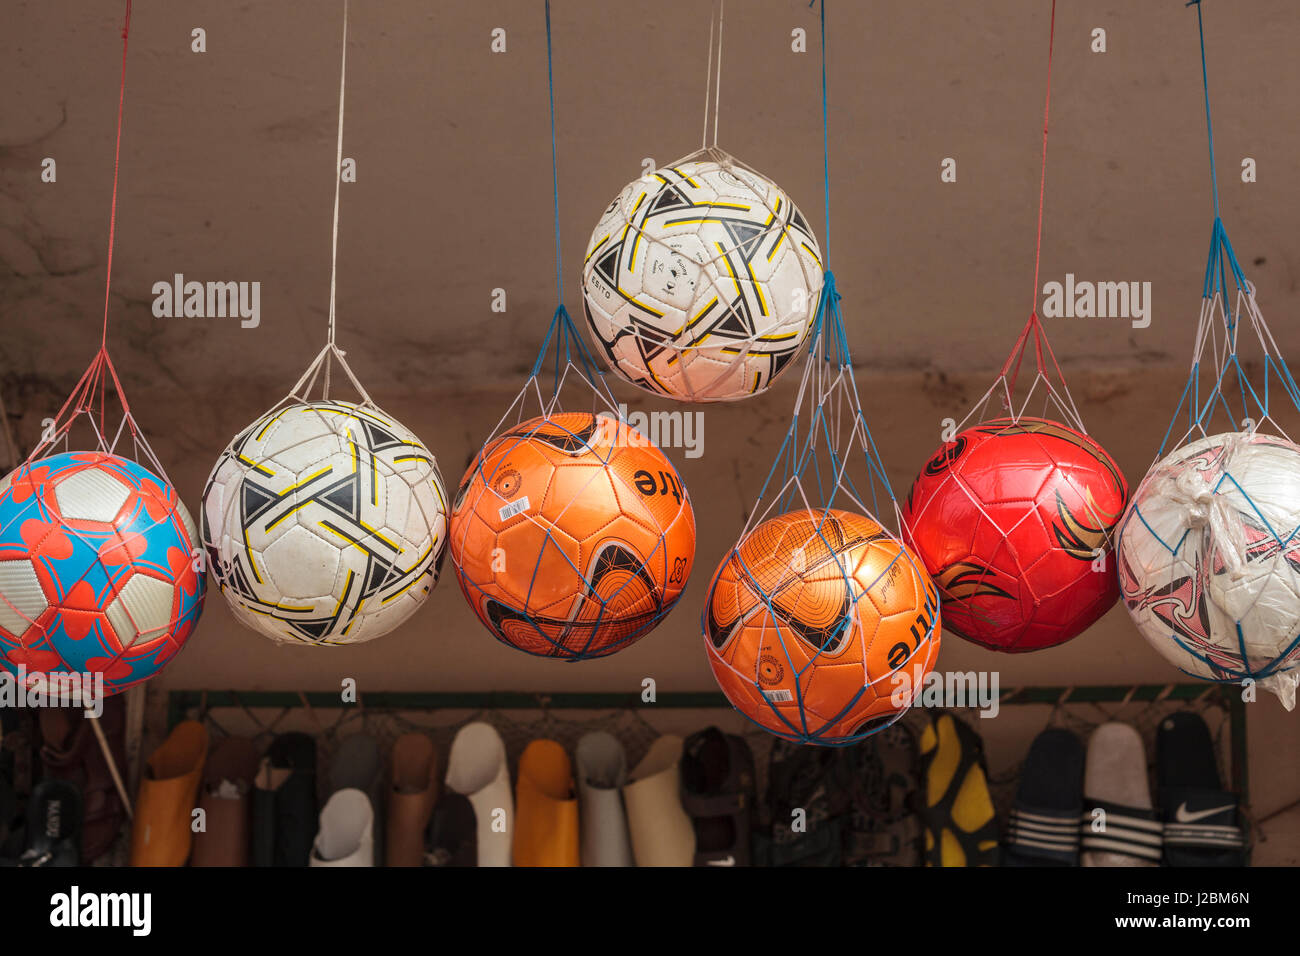 Africa Gambia Banjul Multiple Netted Soccer Balls Hanging